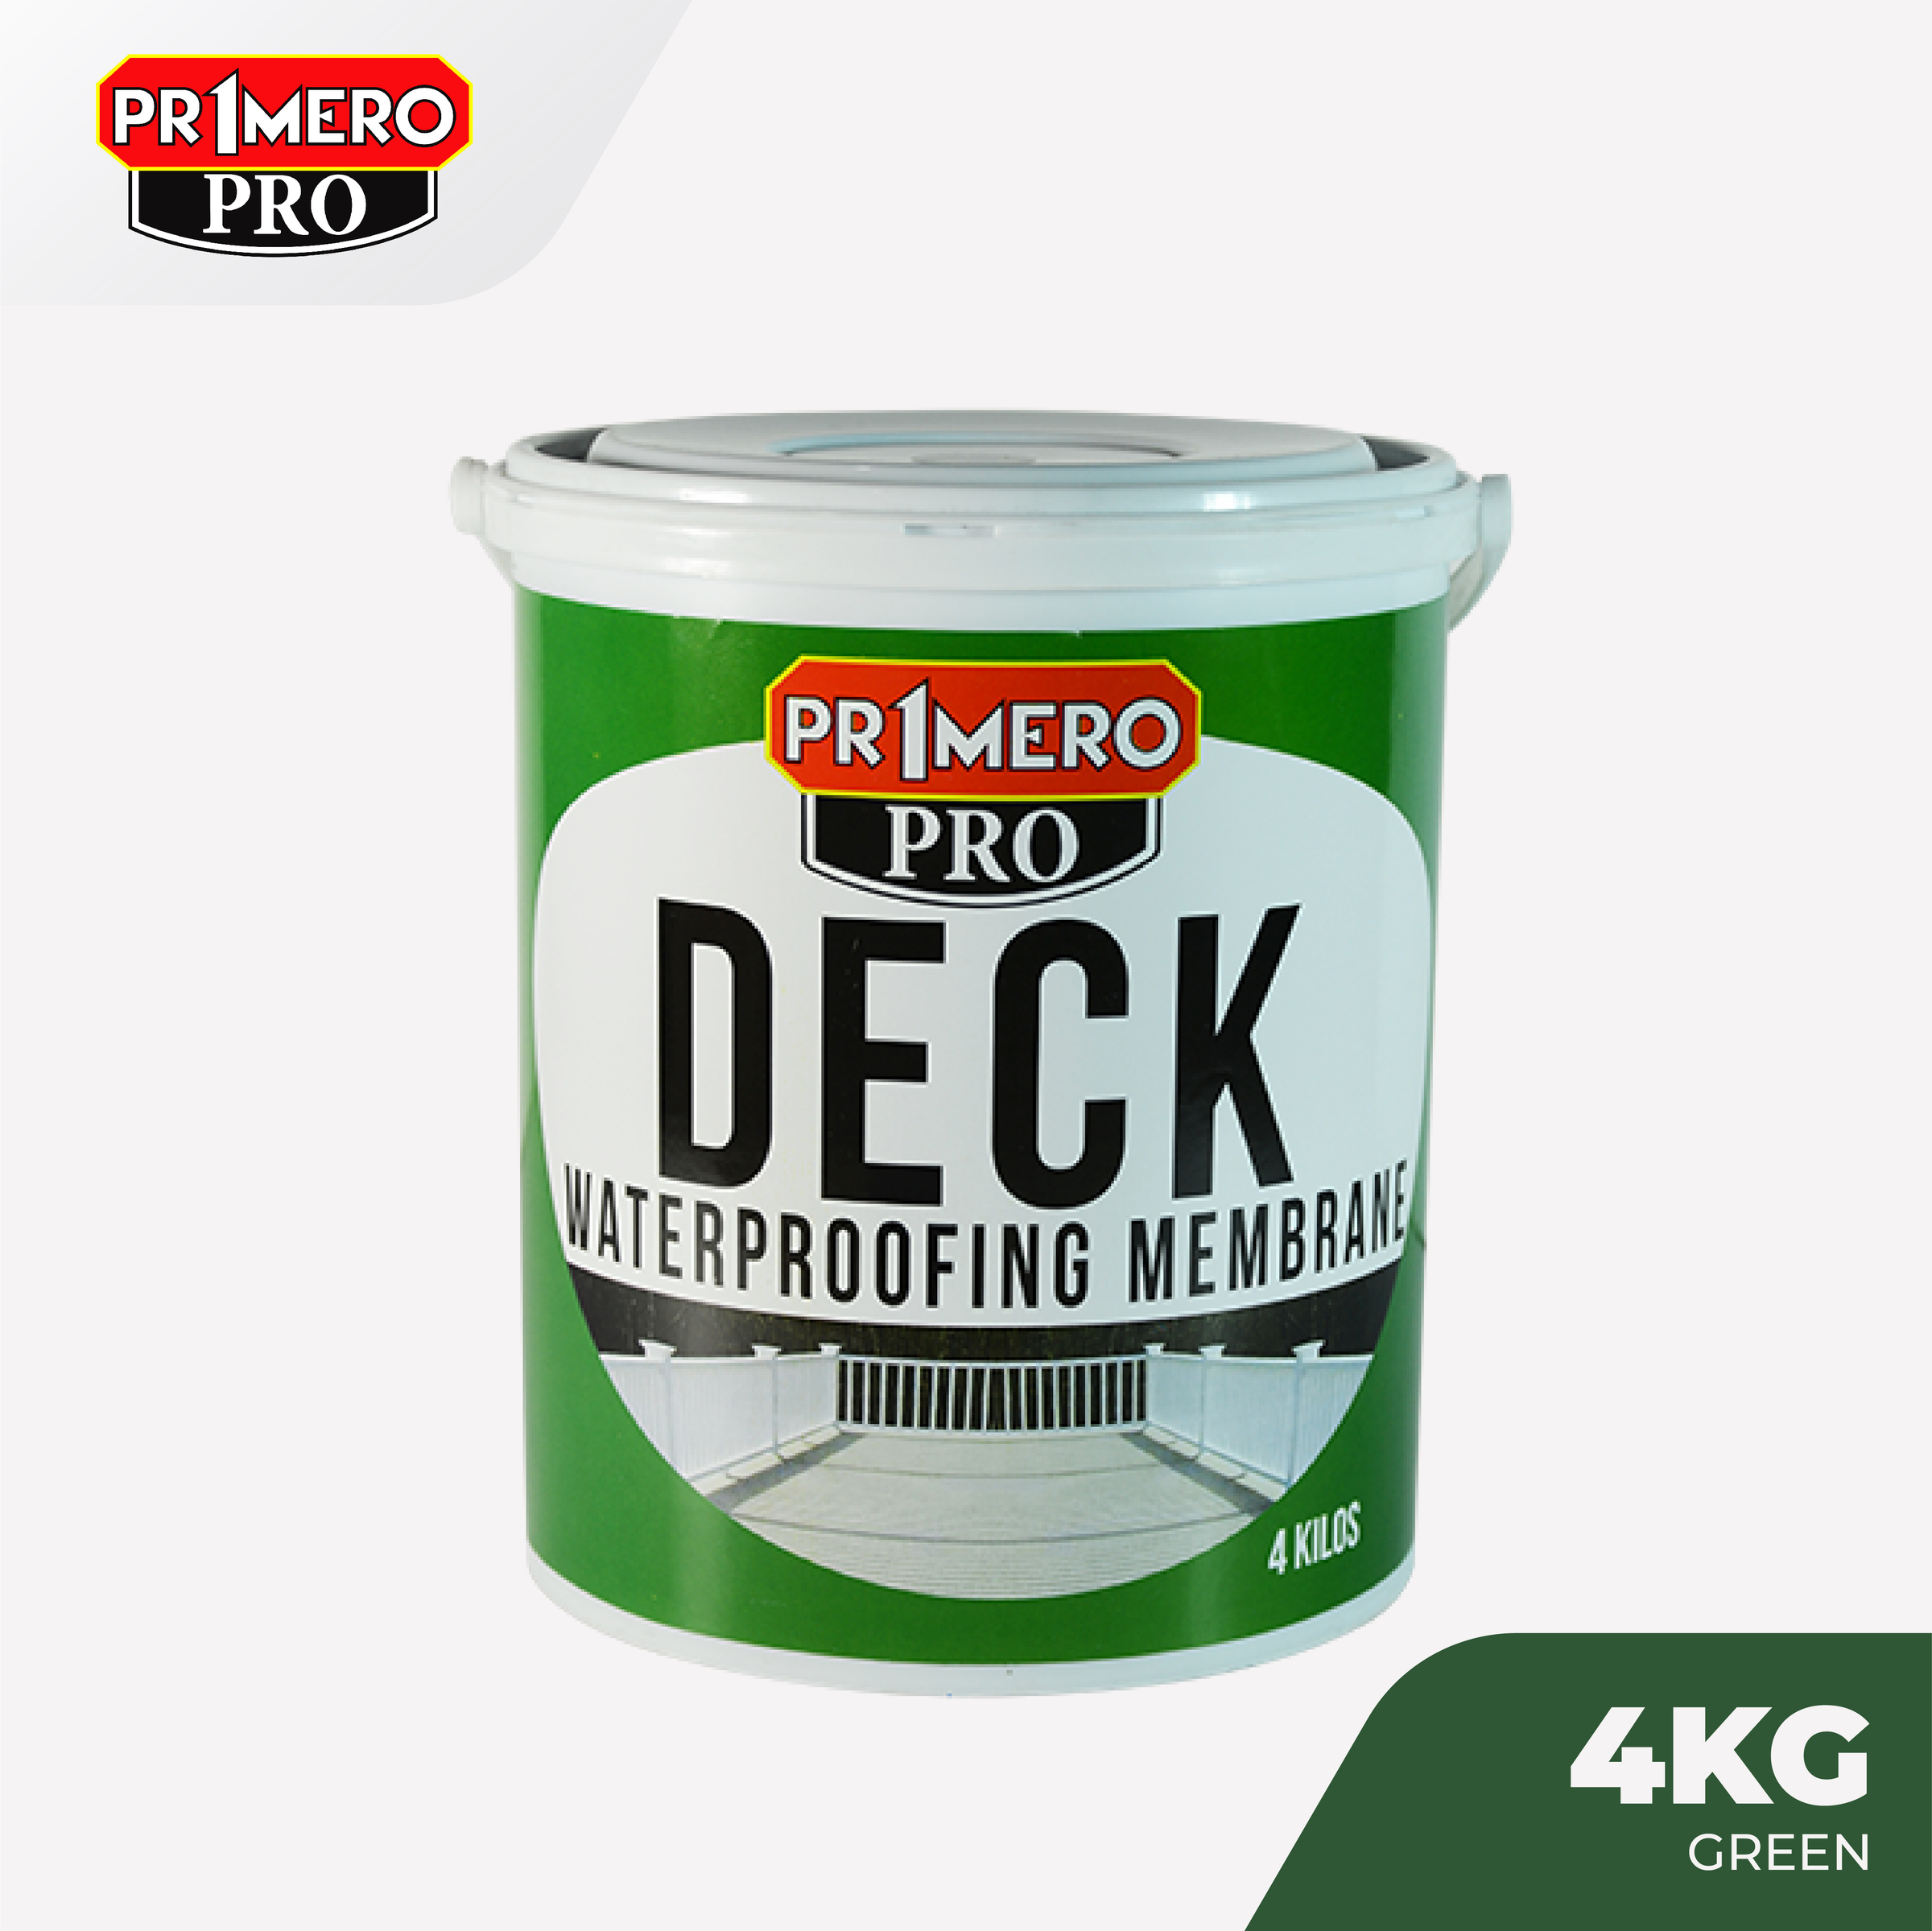 Primero Pro Deck Waterproofing Membrane Green - 4kg